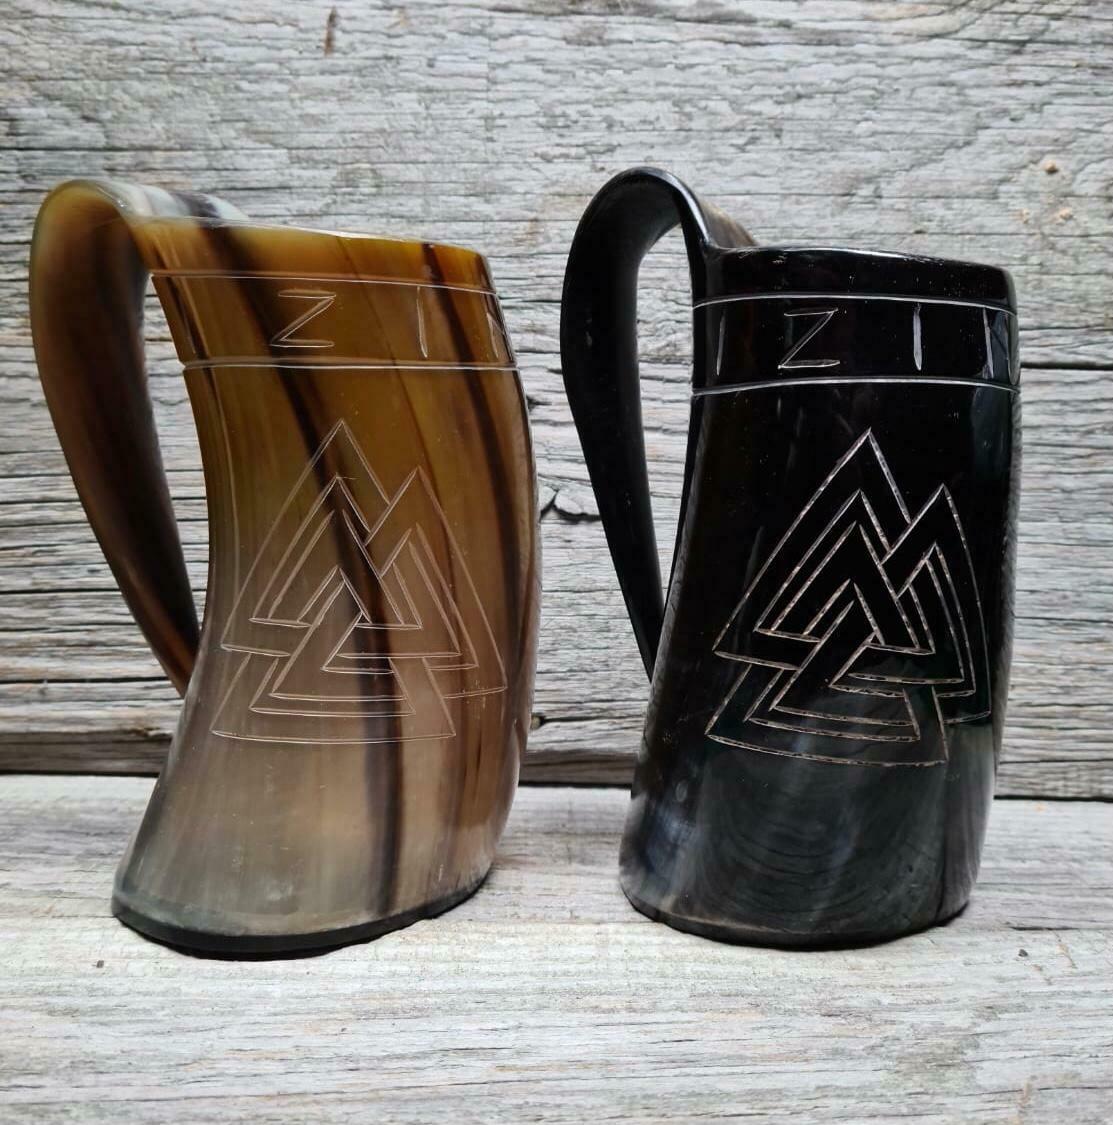 Valknut Viking Drinking Tankard